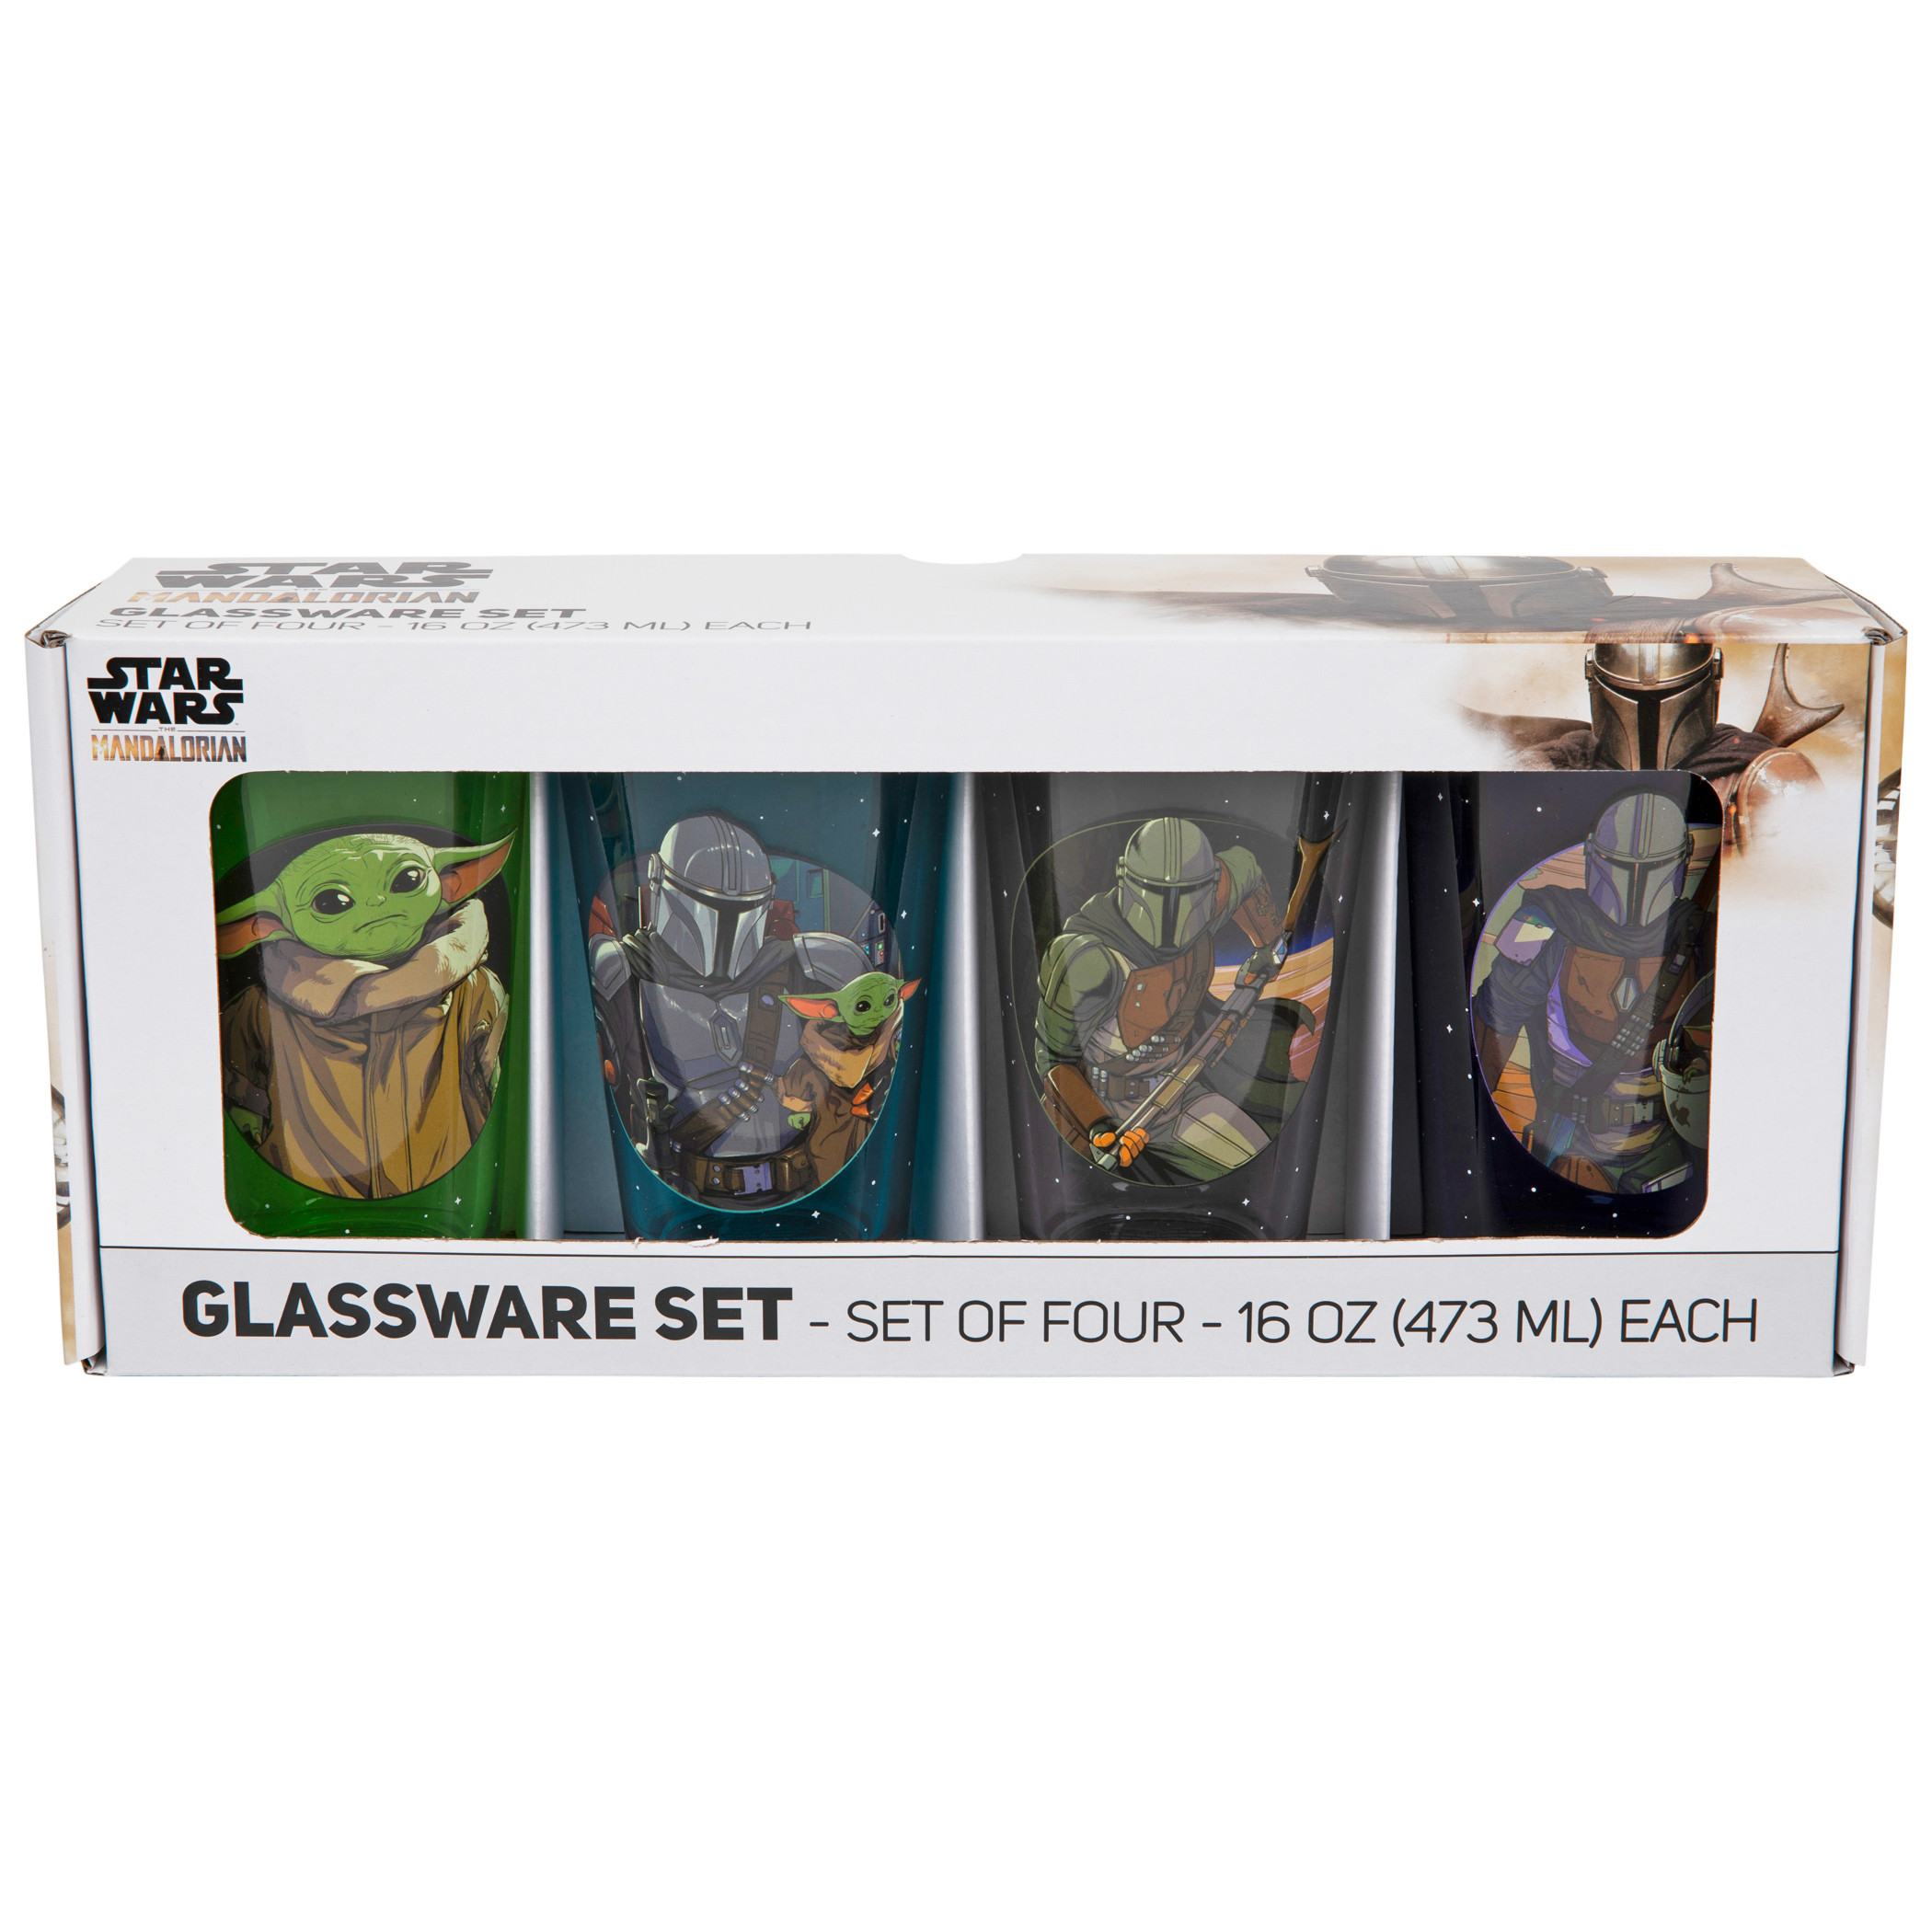 Star Wars Grogu “The Child” Glassware Set of 4 10oz Each